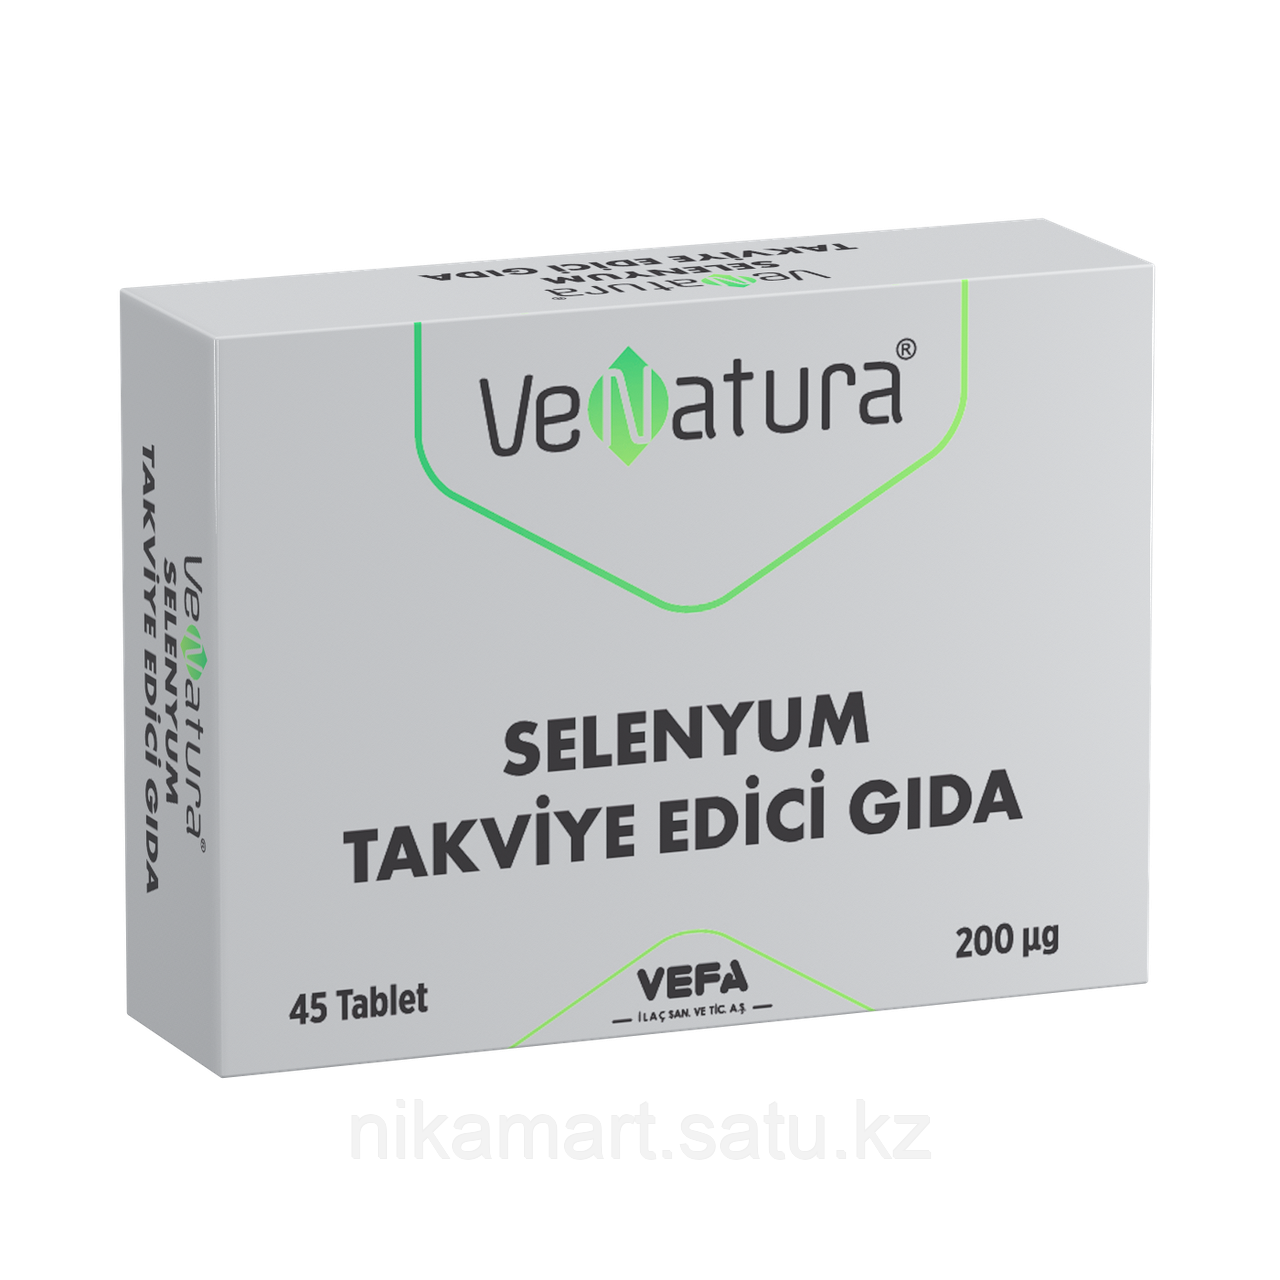 Venatura селен 200 мг / 45 таблеток